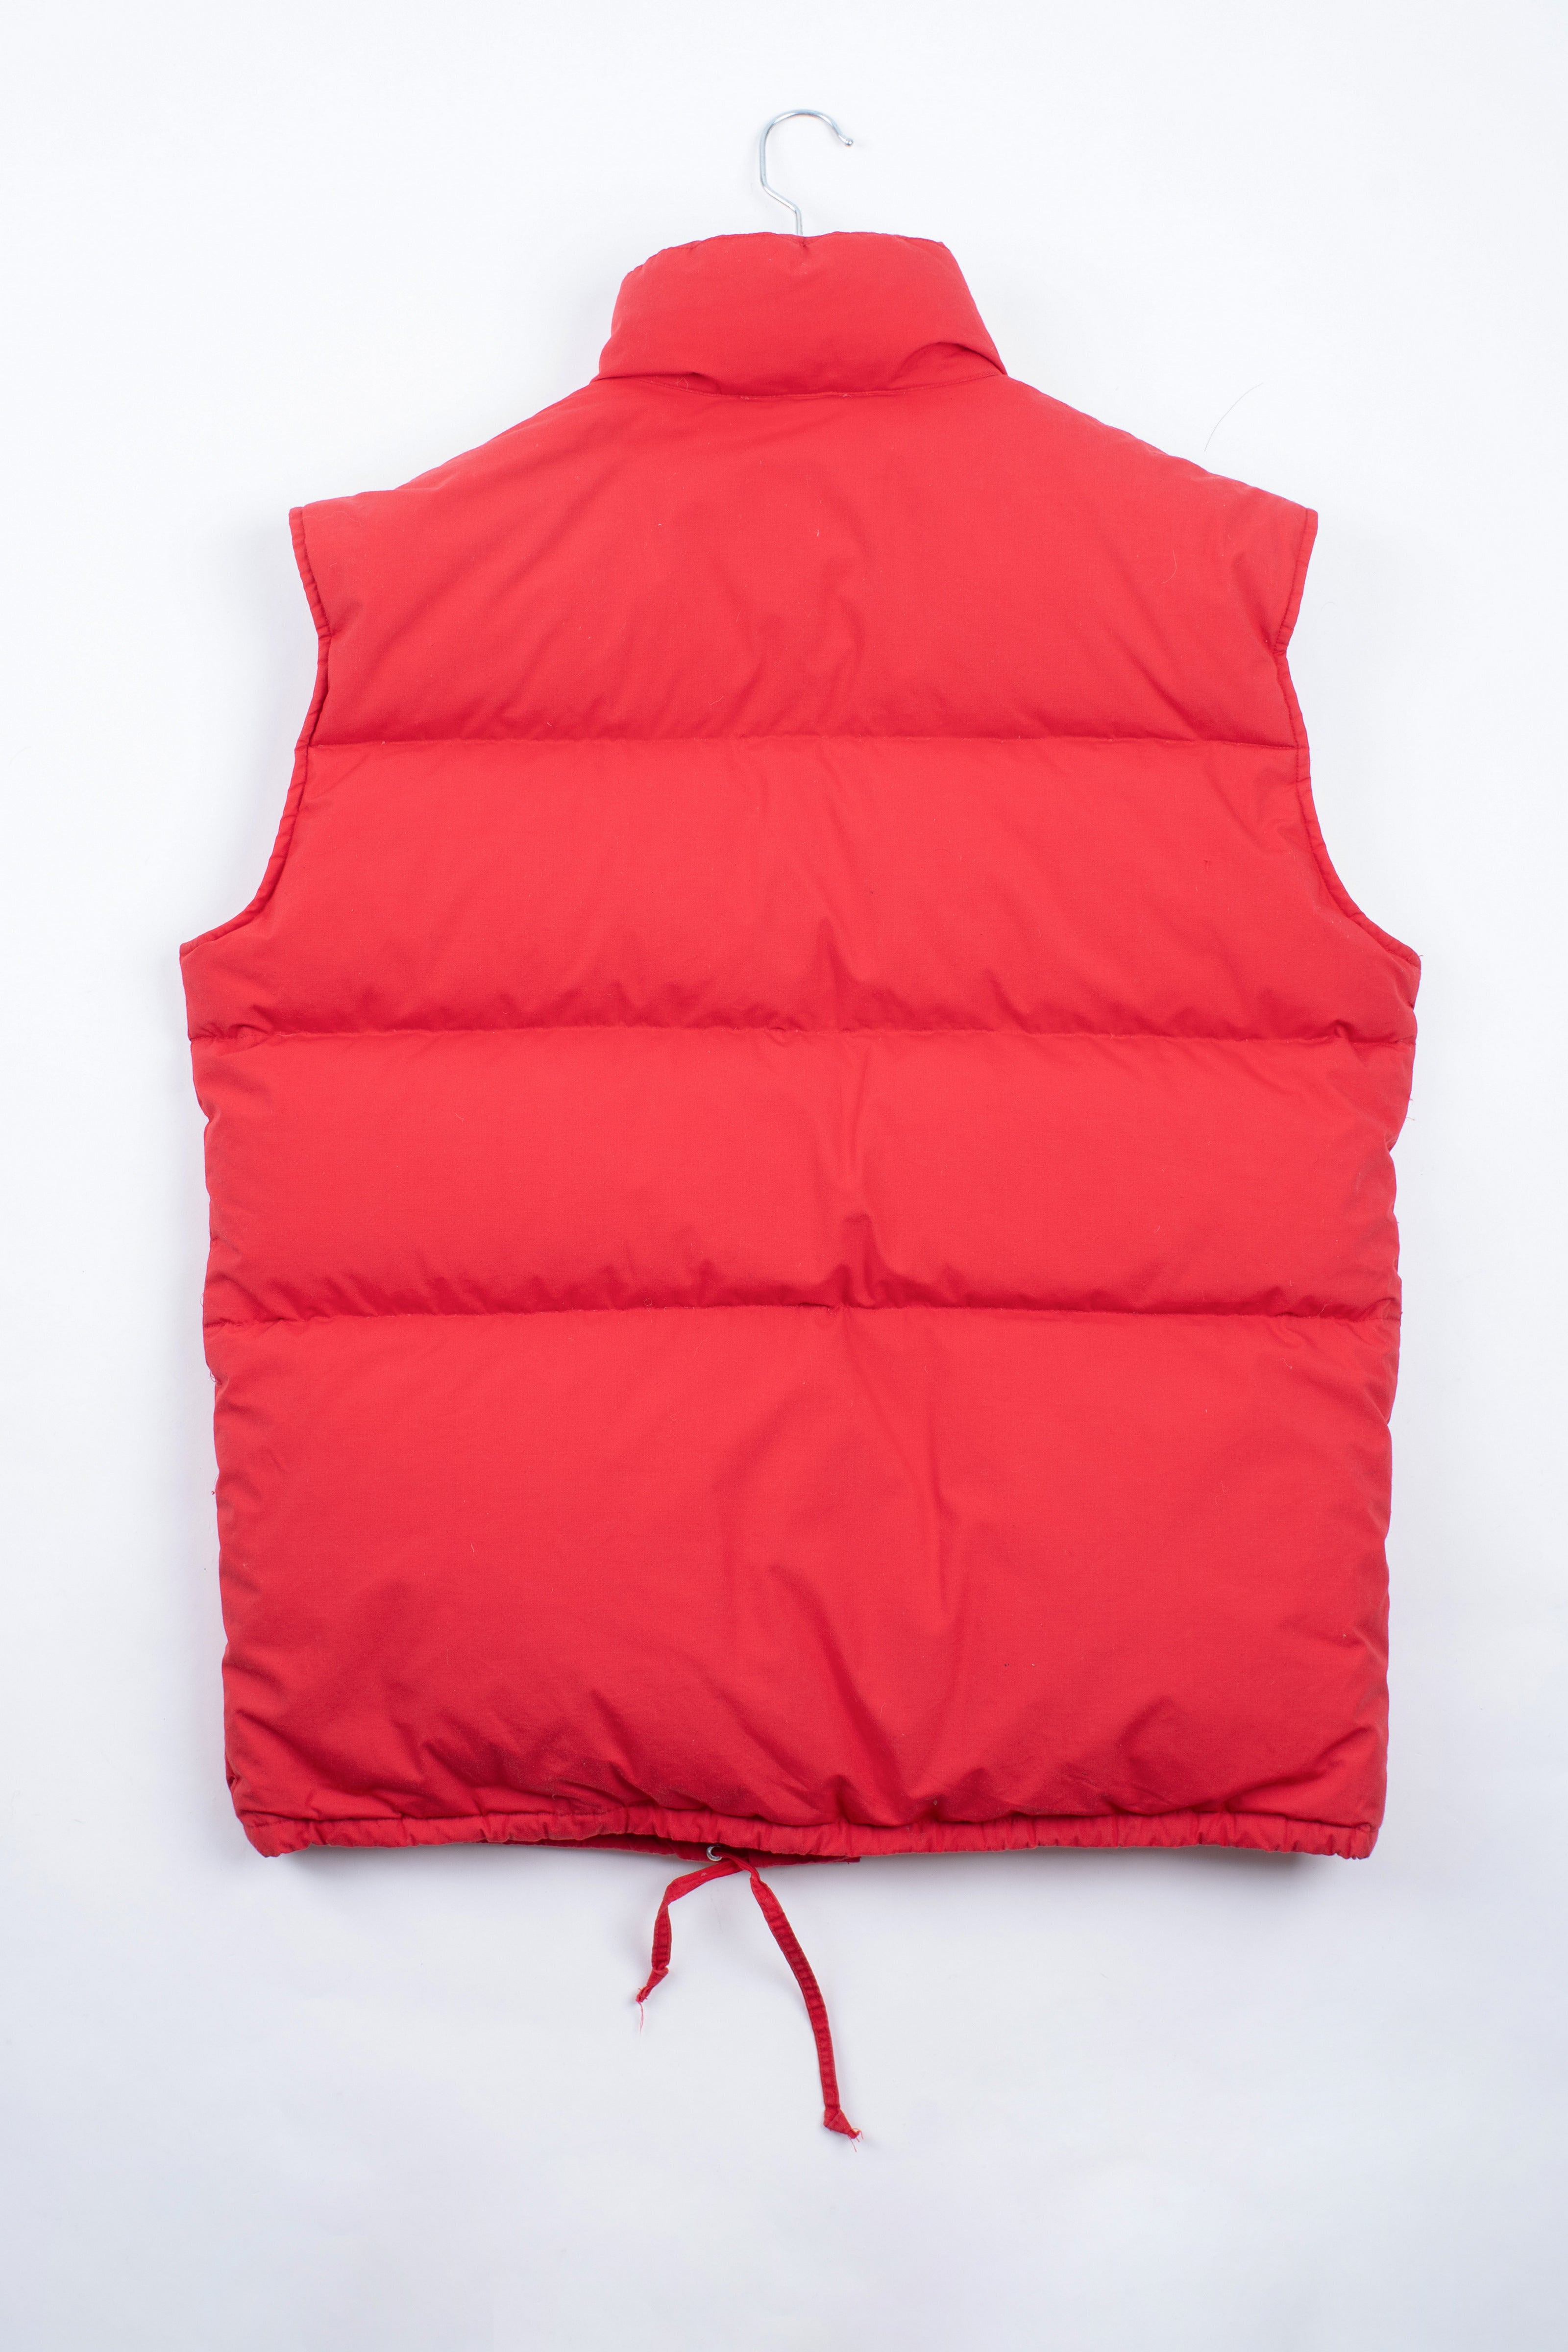 Vintage Elho Skiwear Down Puffer Red Men's Vest, SIZE XL